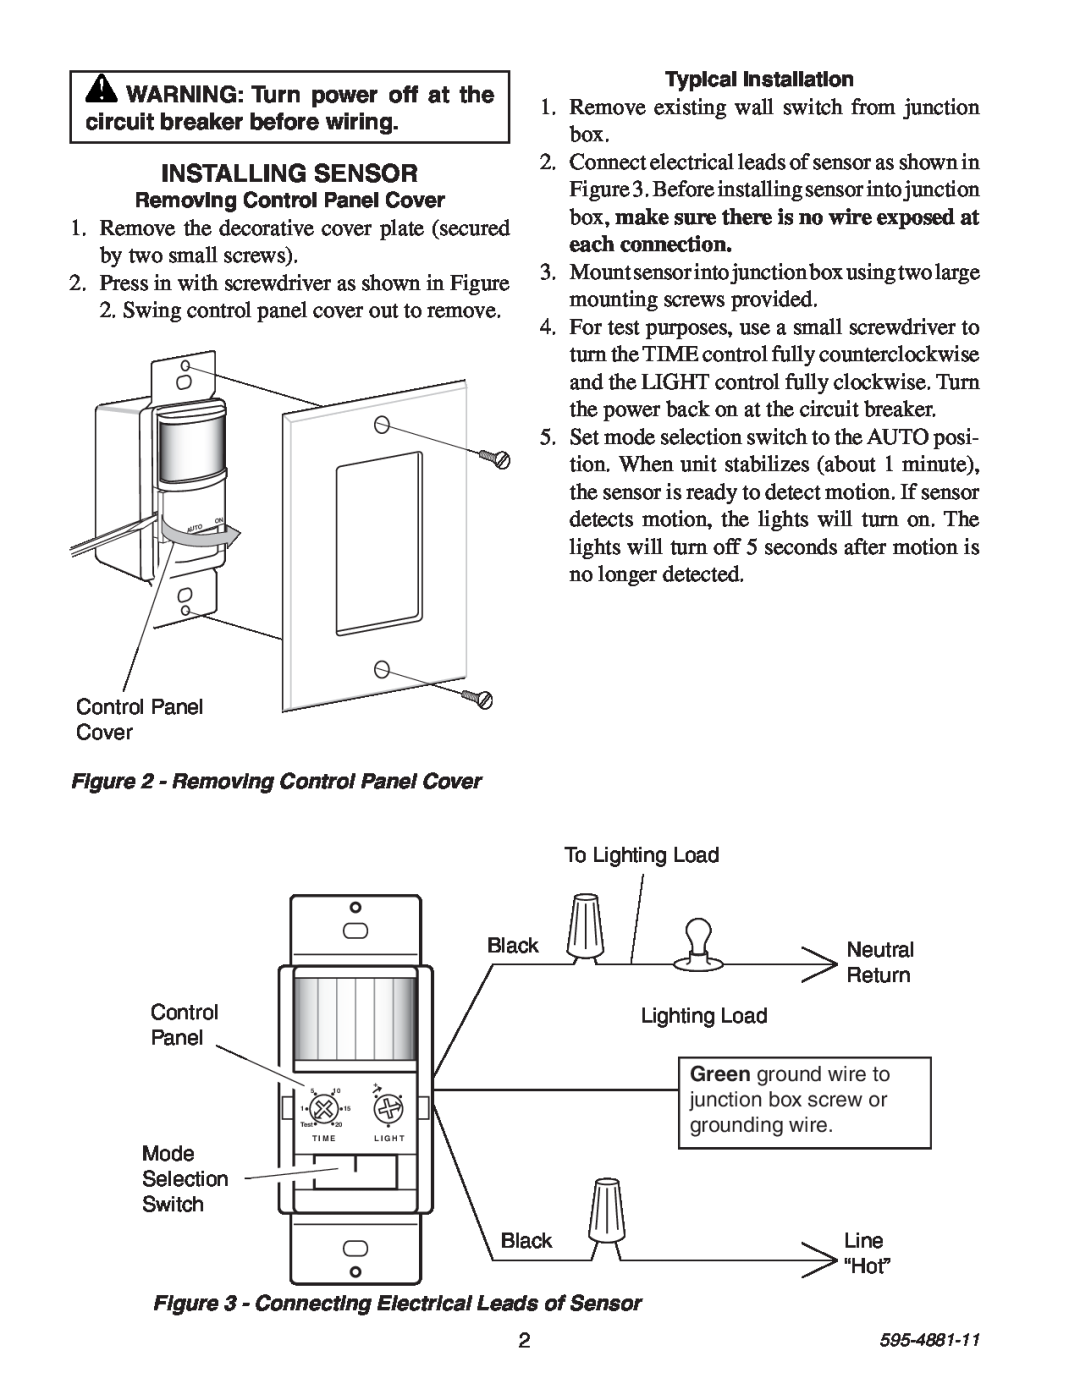 Heath Zenith 6105 manual Installing Sensor 